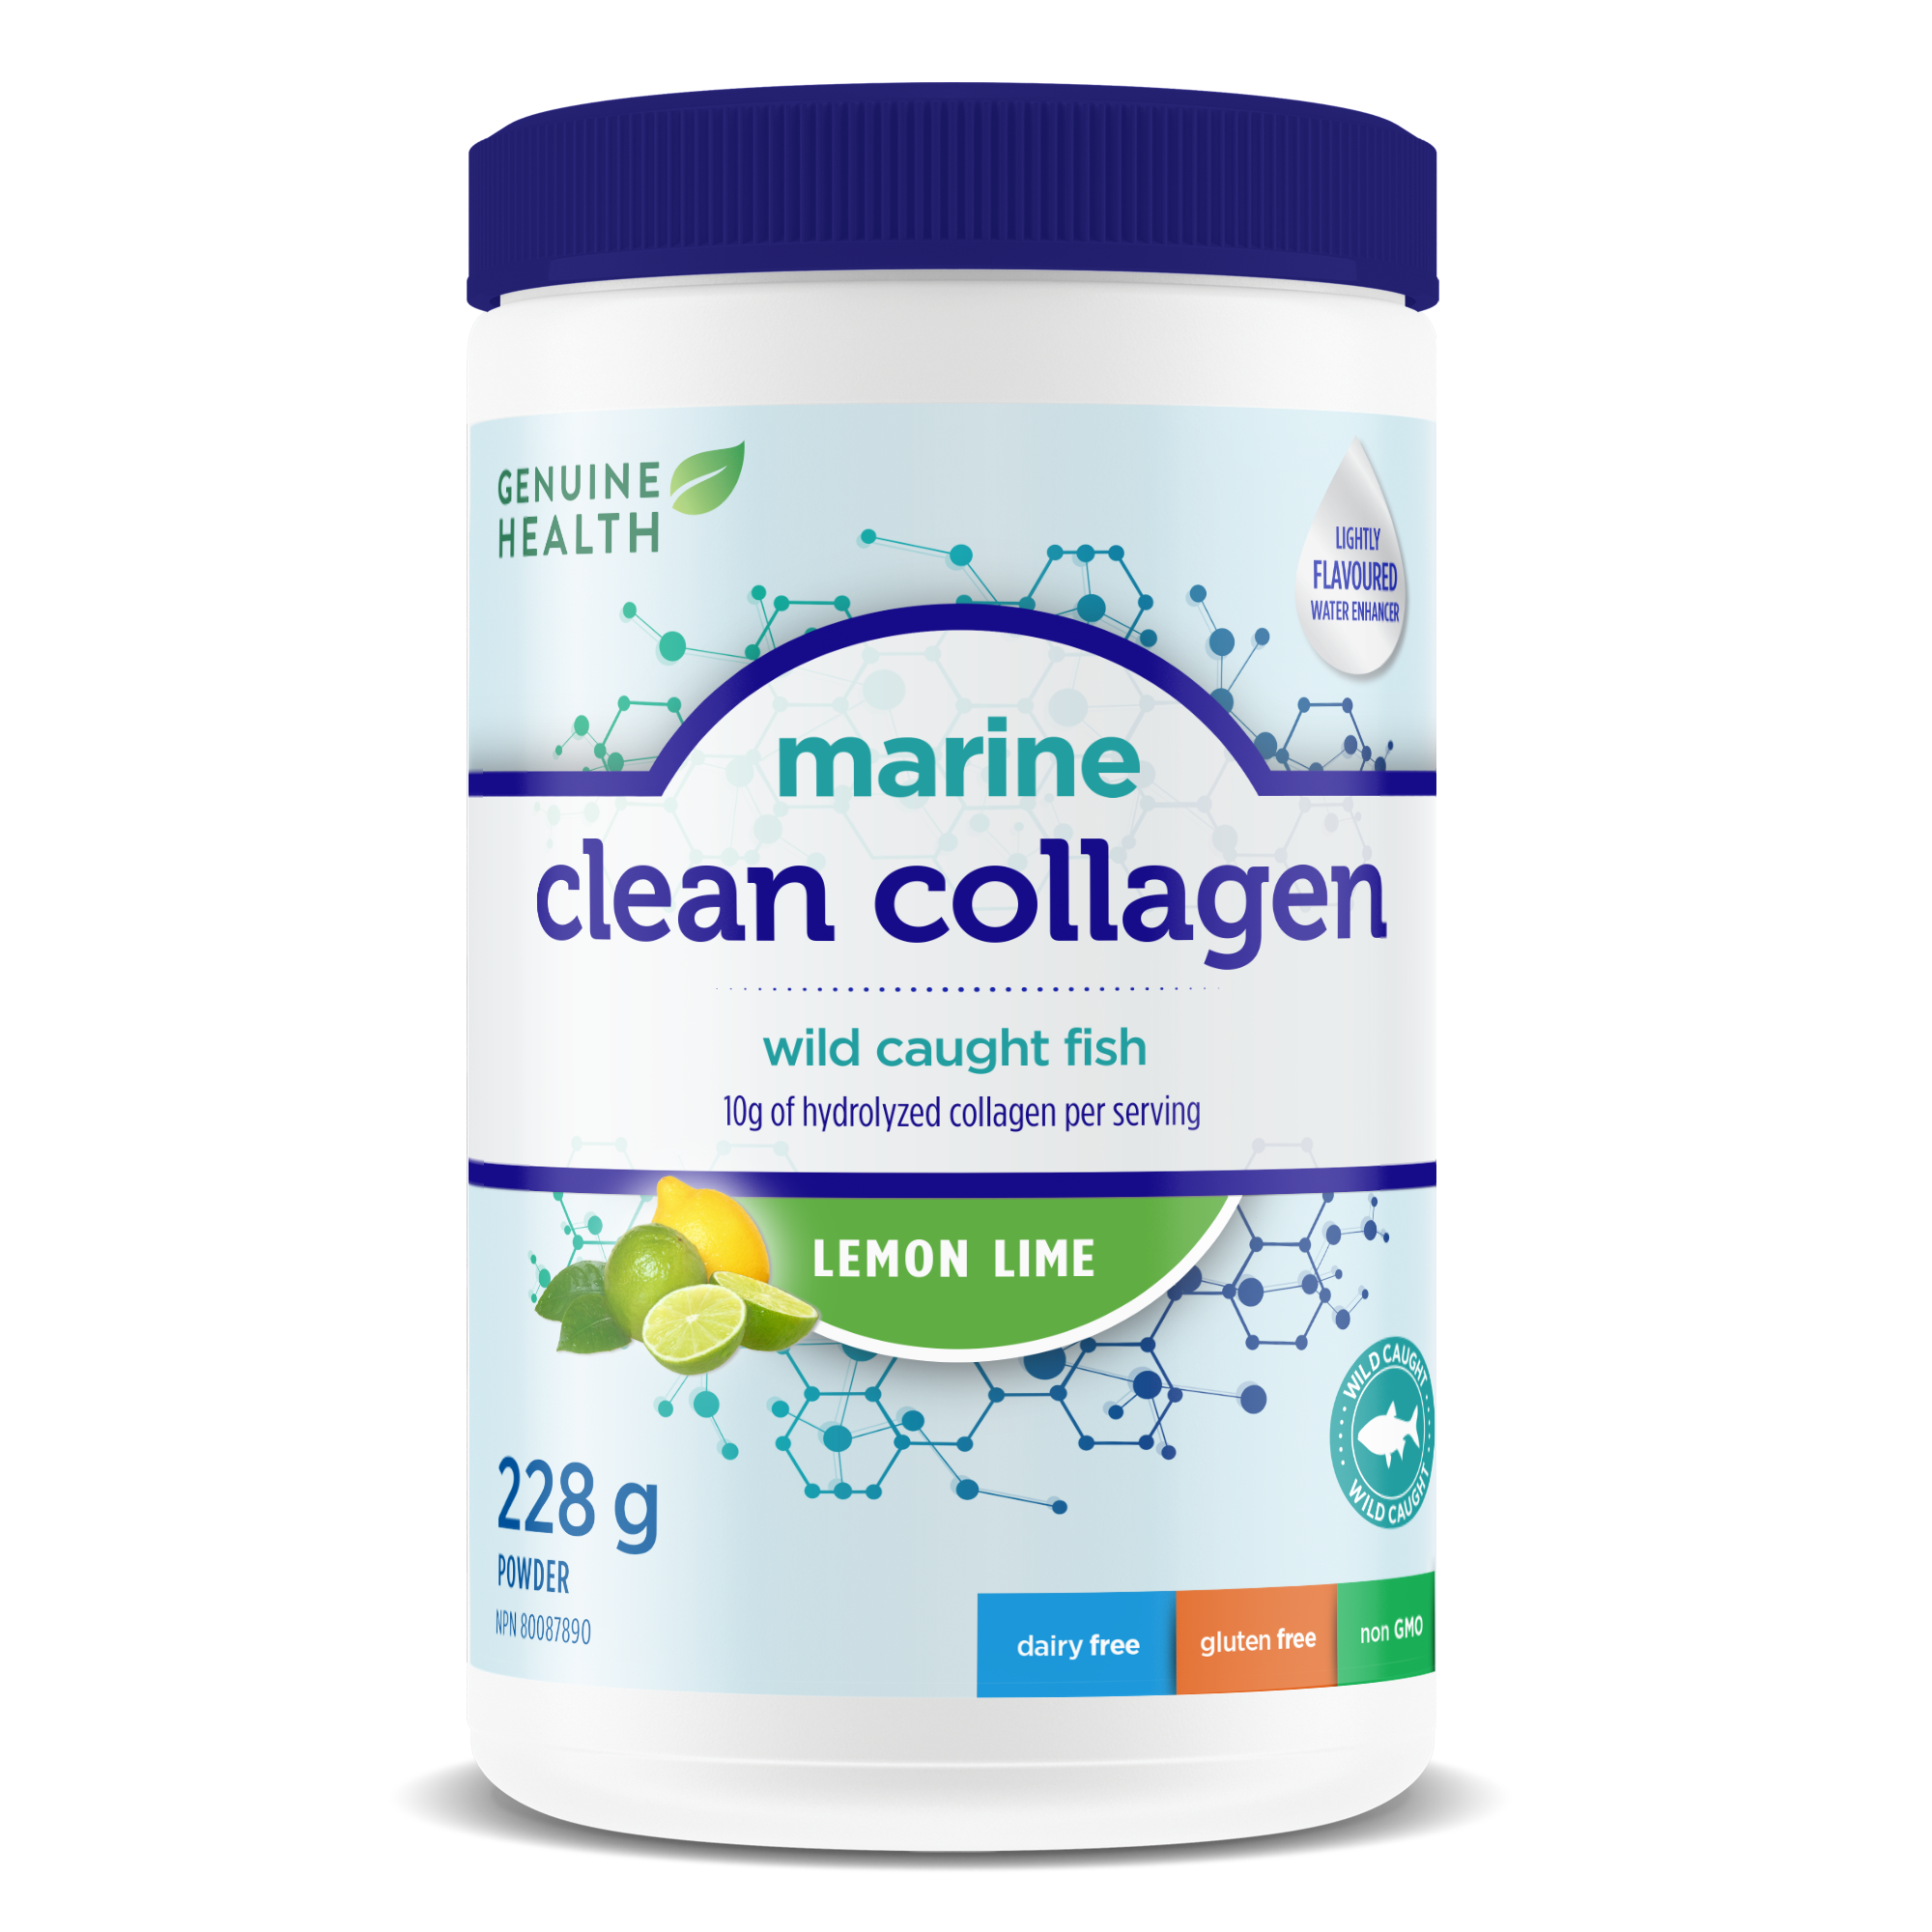 Genuine Health Marine Clean Collagen Lemon Lime 228g